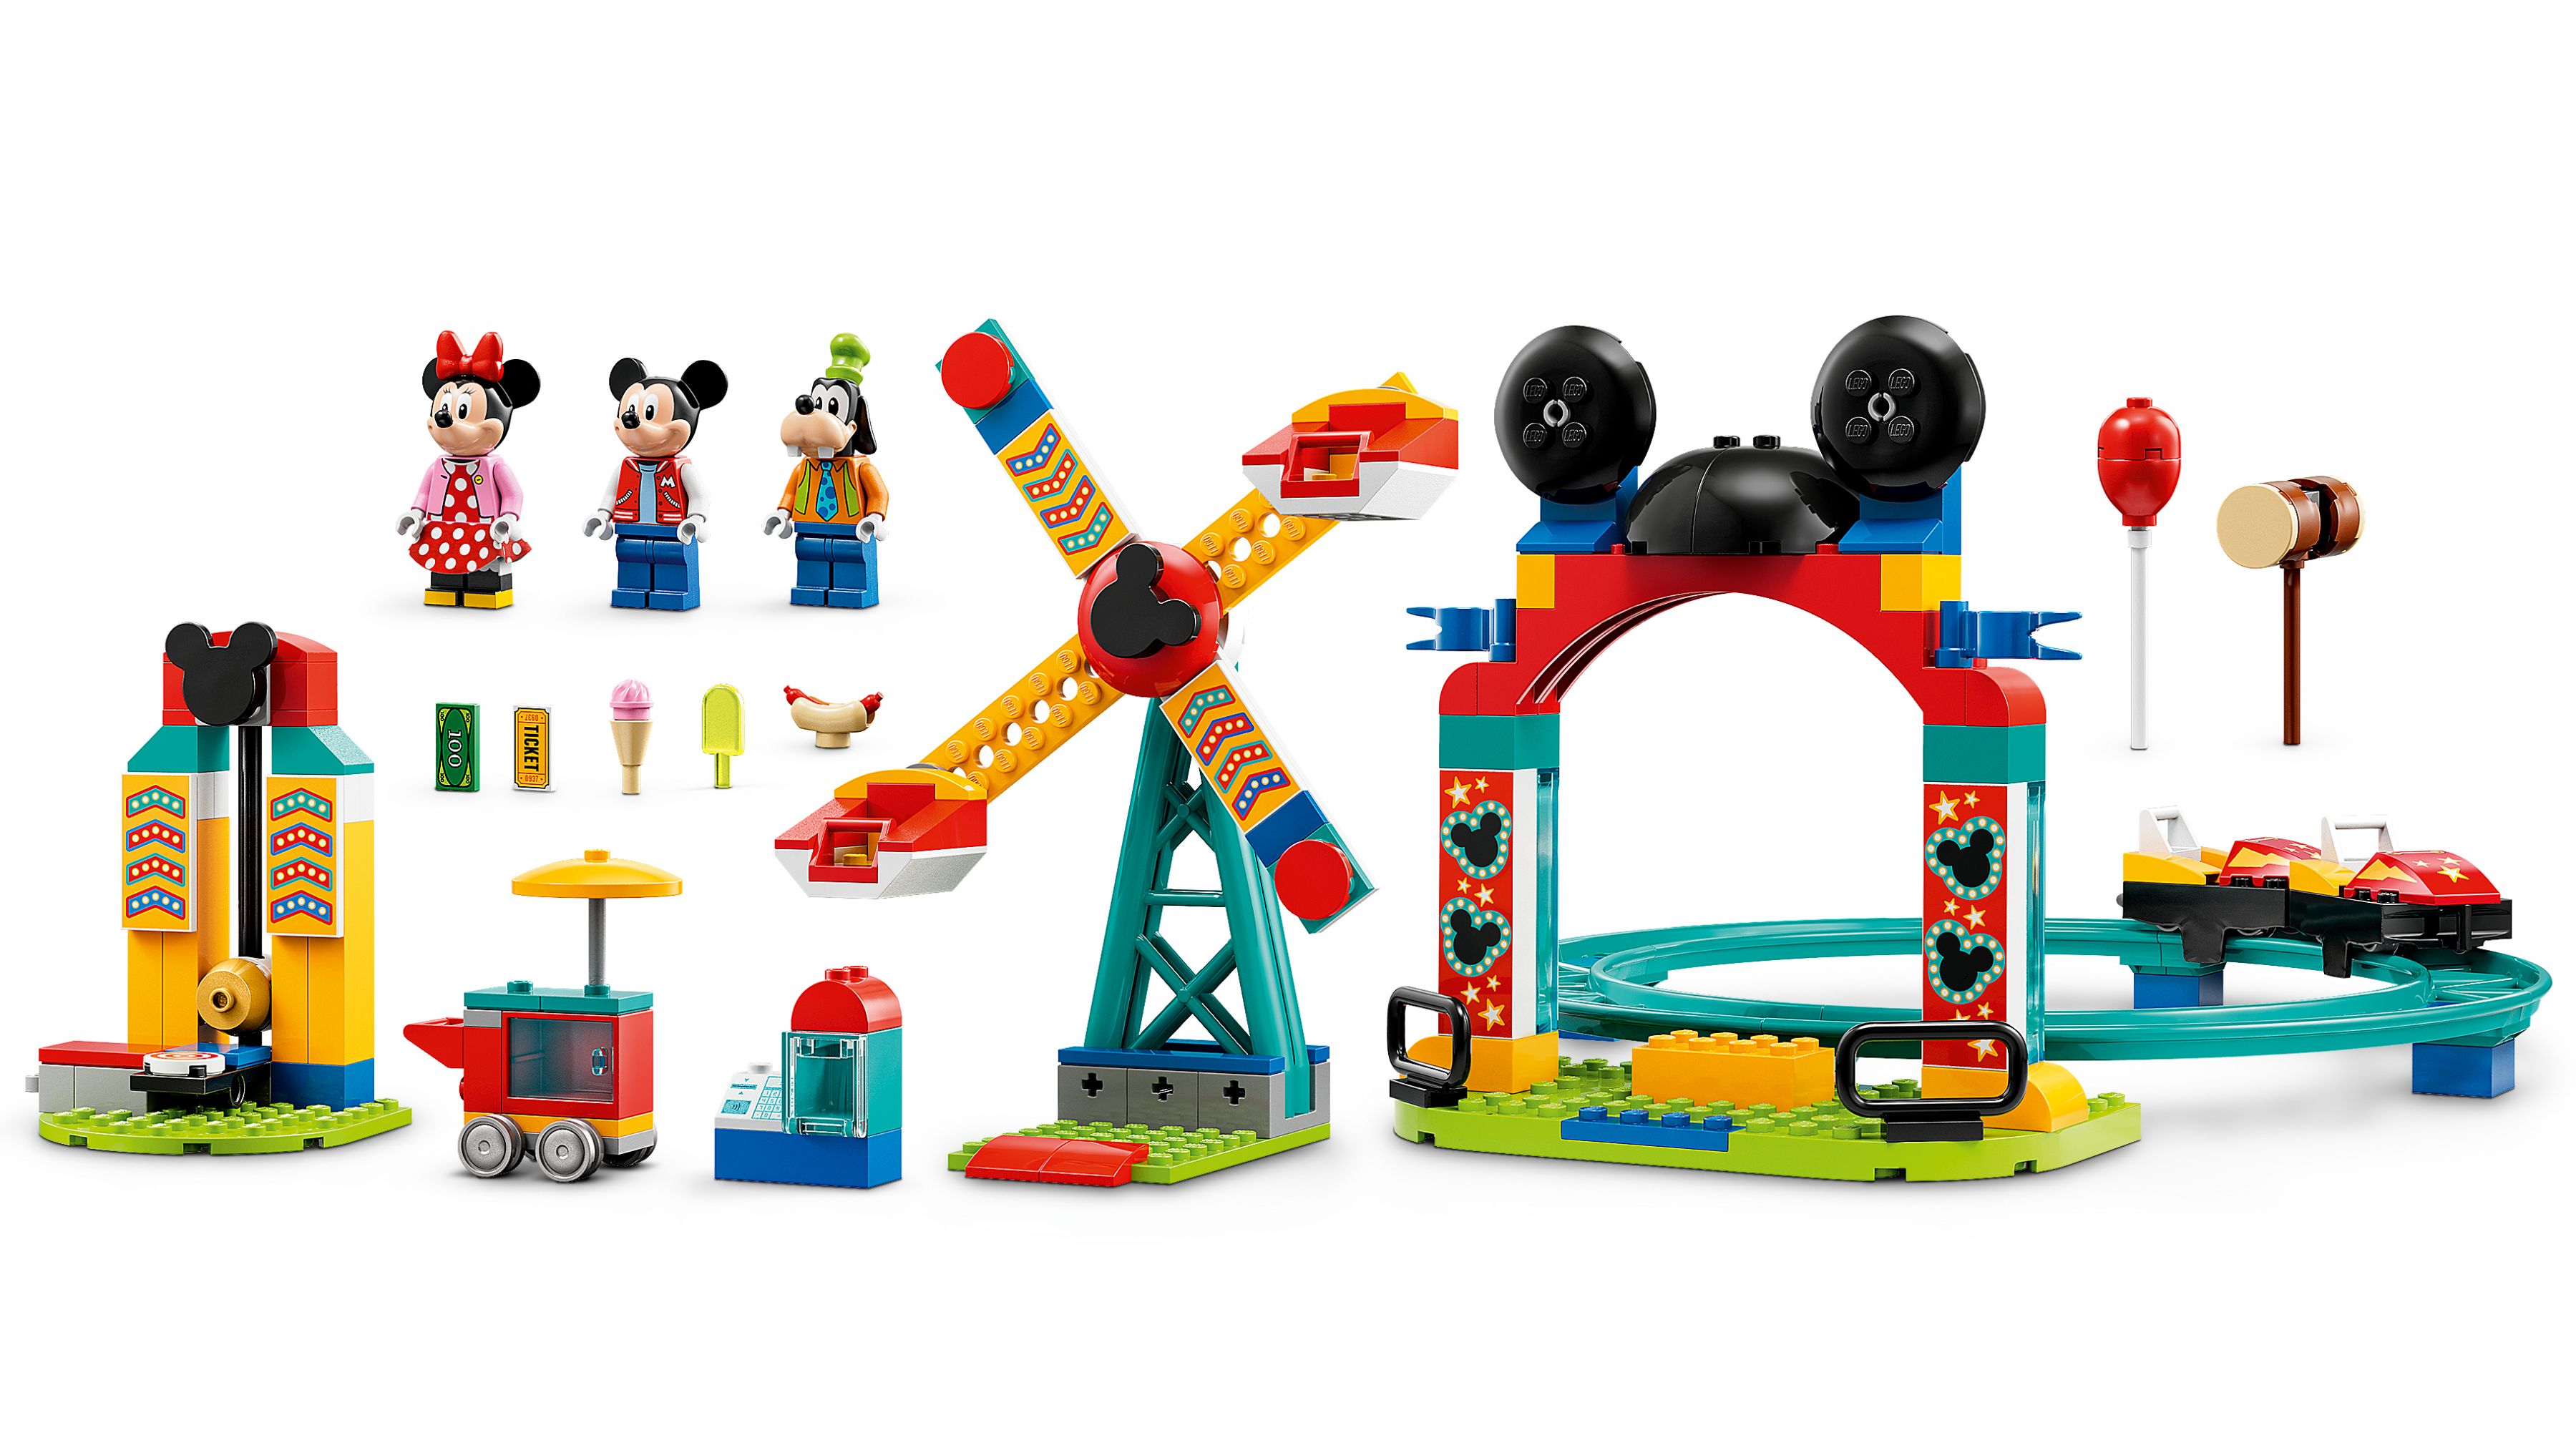 LEGO Disney 10778 Micky, Minnie und Goofy auf dem Jahrmarkt LEGO_10778_WEB_SEC01_NOBG.jpg